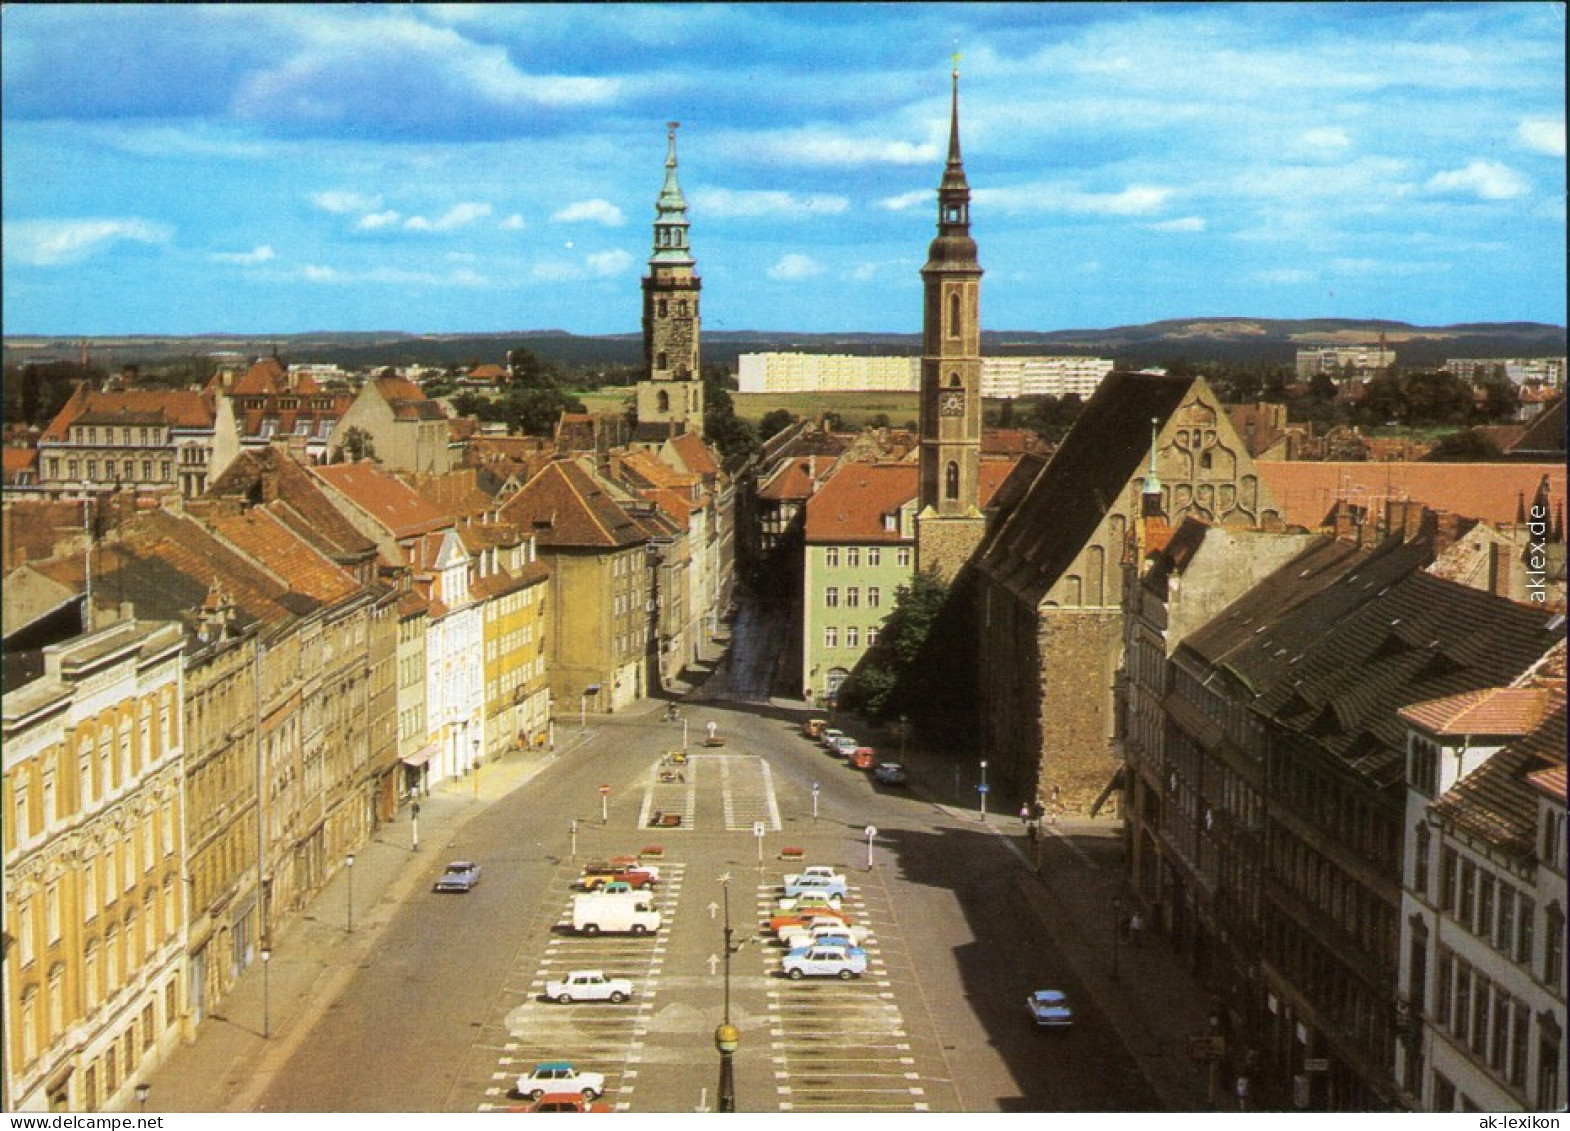 Görlitz Zgorzelec Blick Vom Reichenbacher Turm Zum Obermarkt / Leninplatz  1981 - Goerlitz